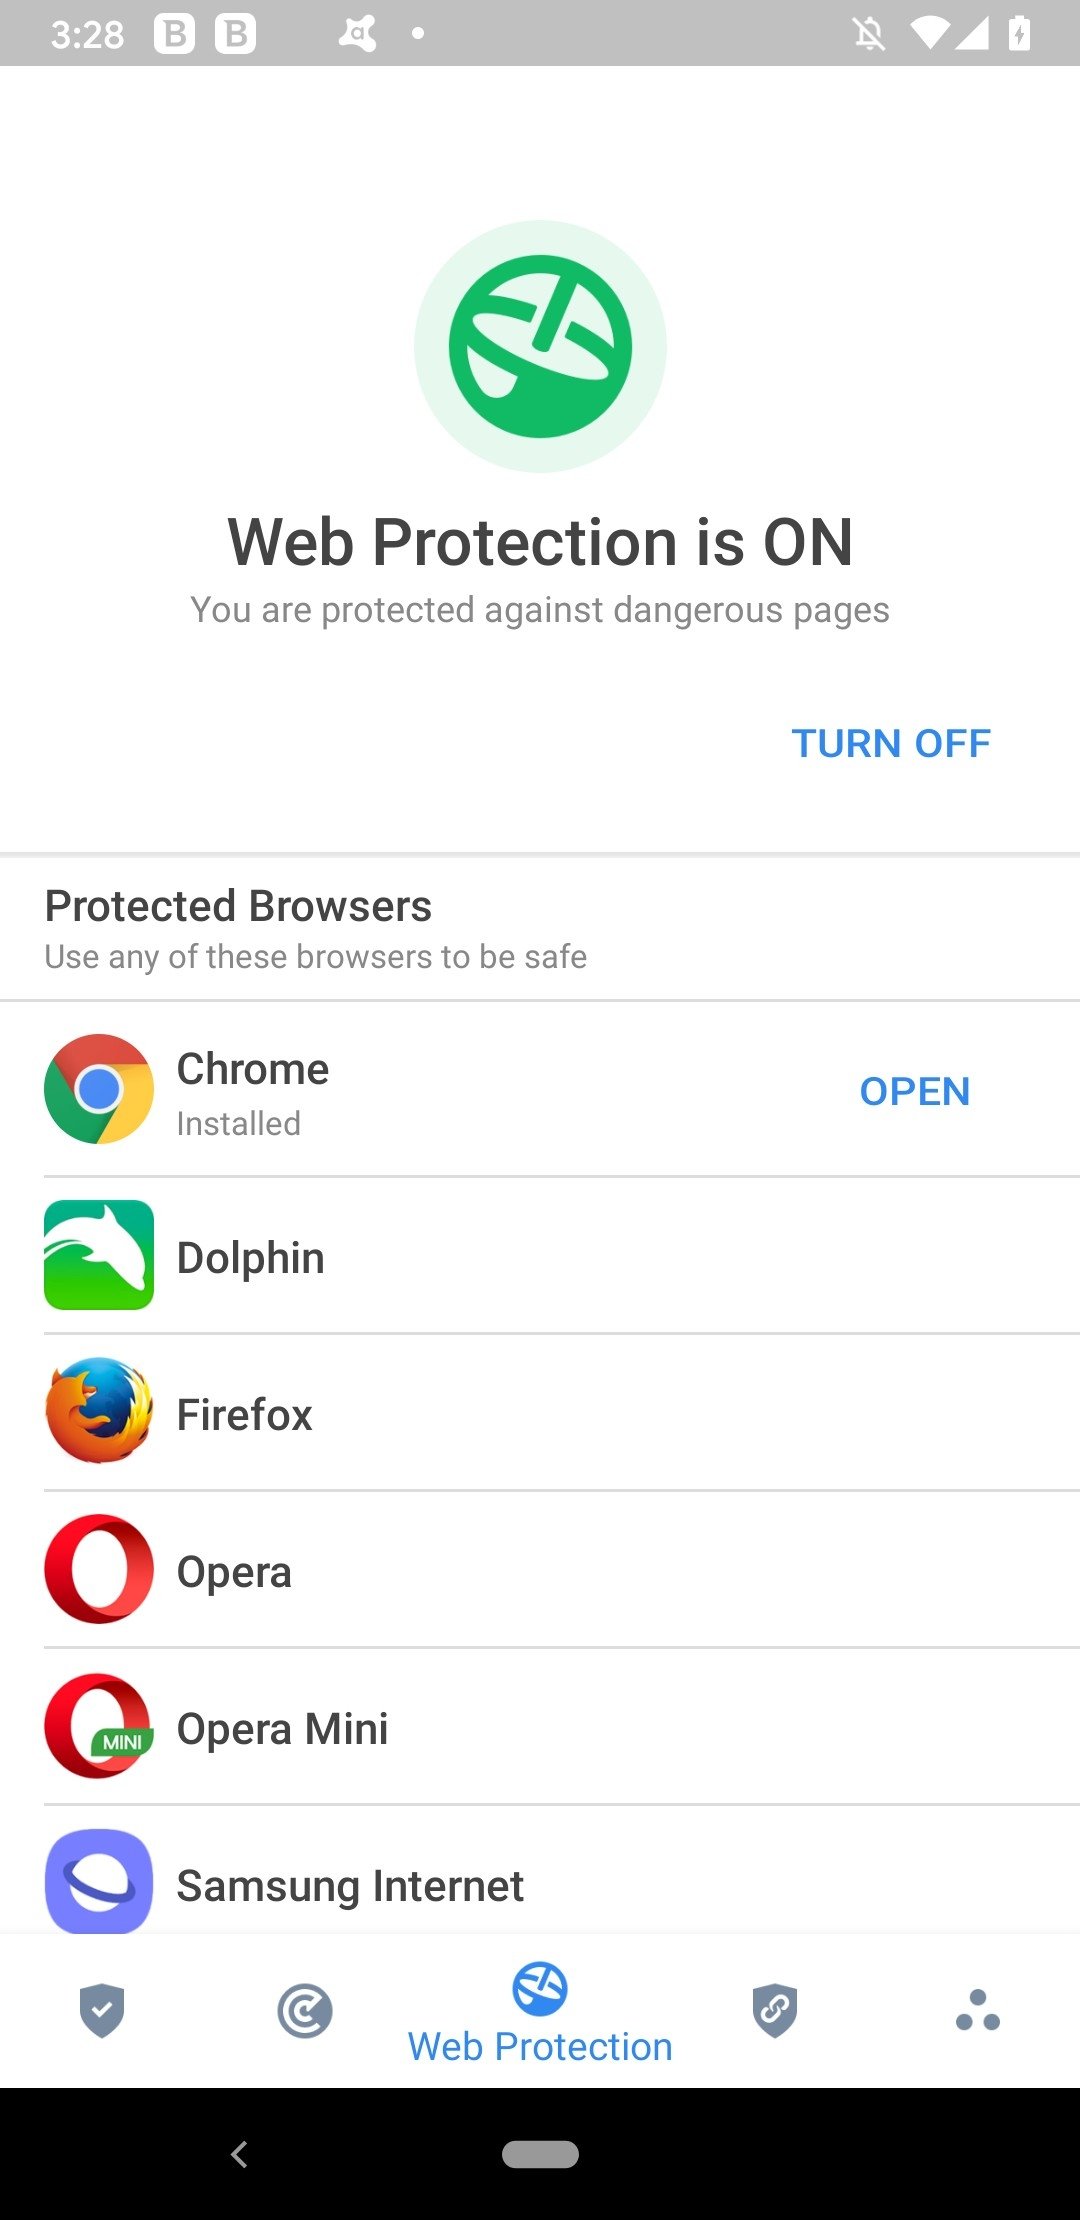 bitdefender mobile security & antivirus